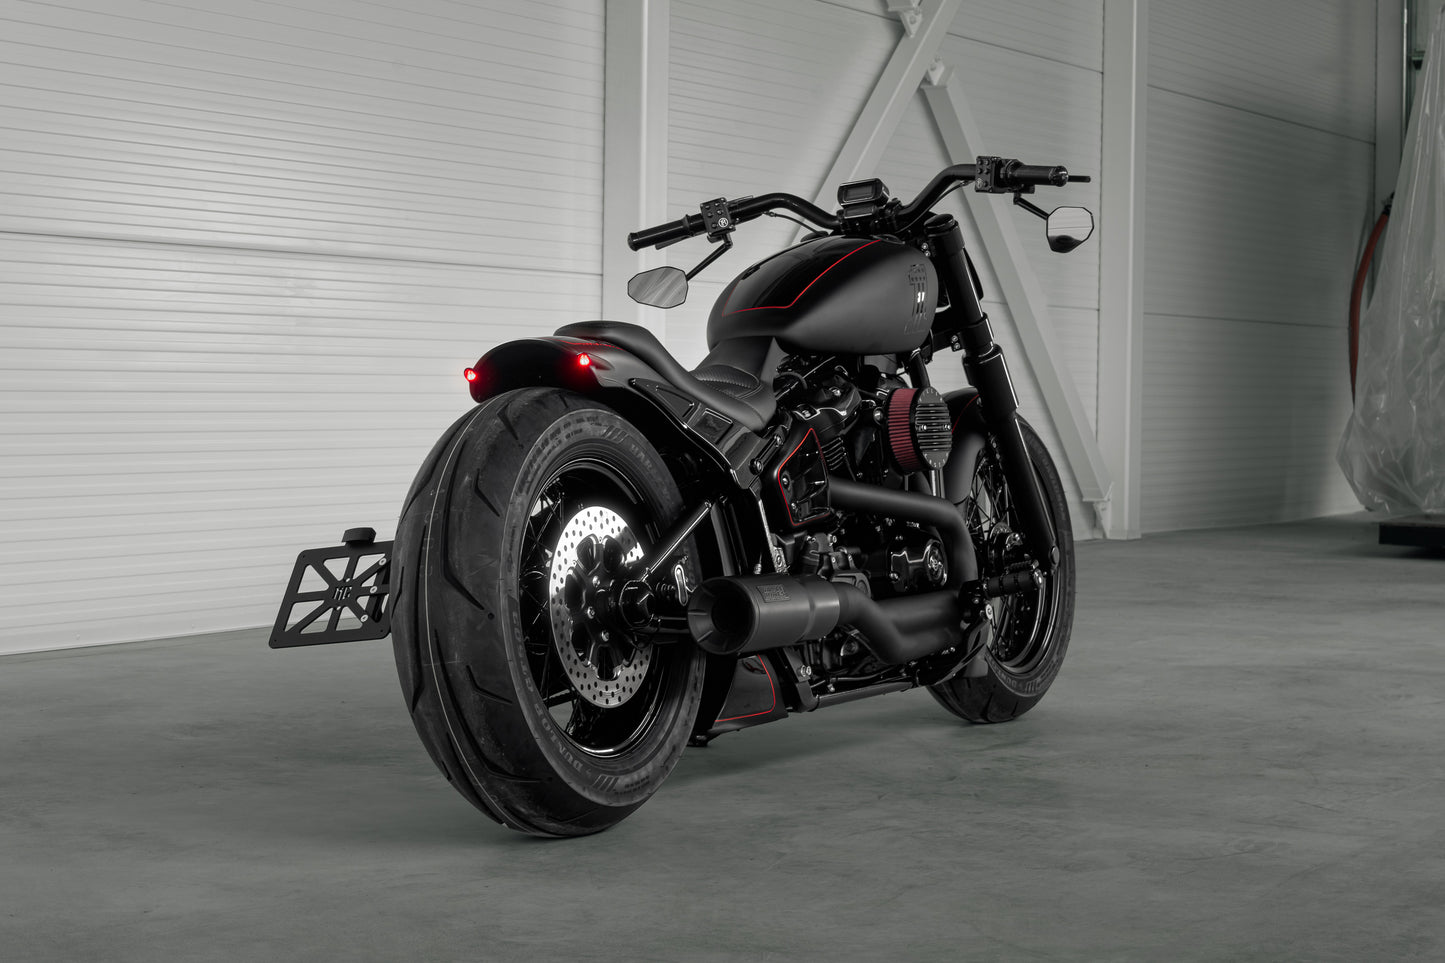 Harley Davidson motorcycle with Killer Custom "Rodstr" rear fender from the rear in a modern garage